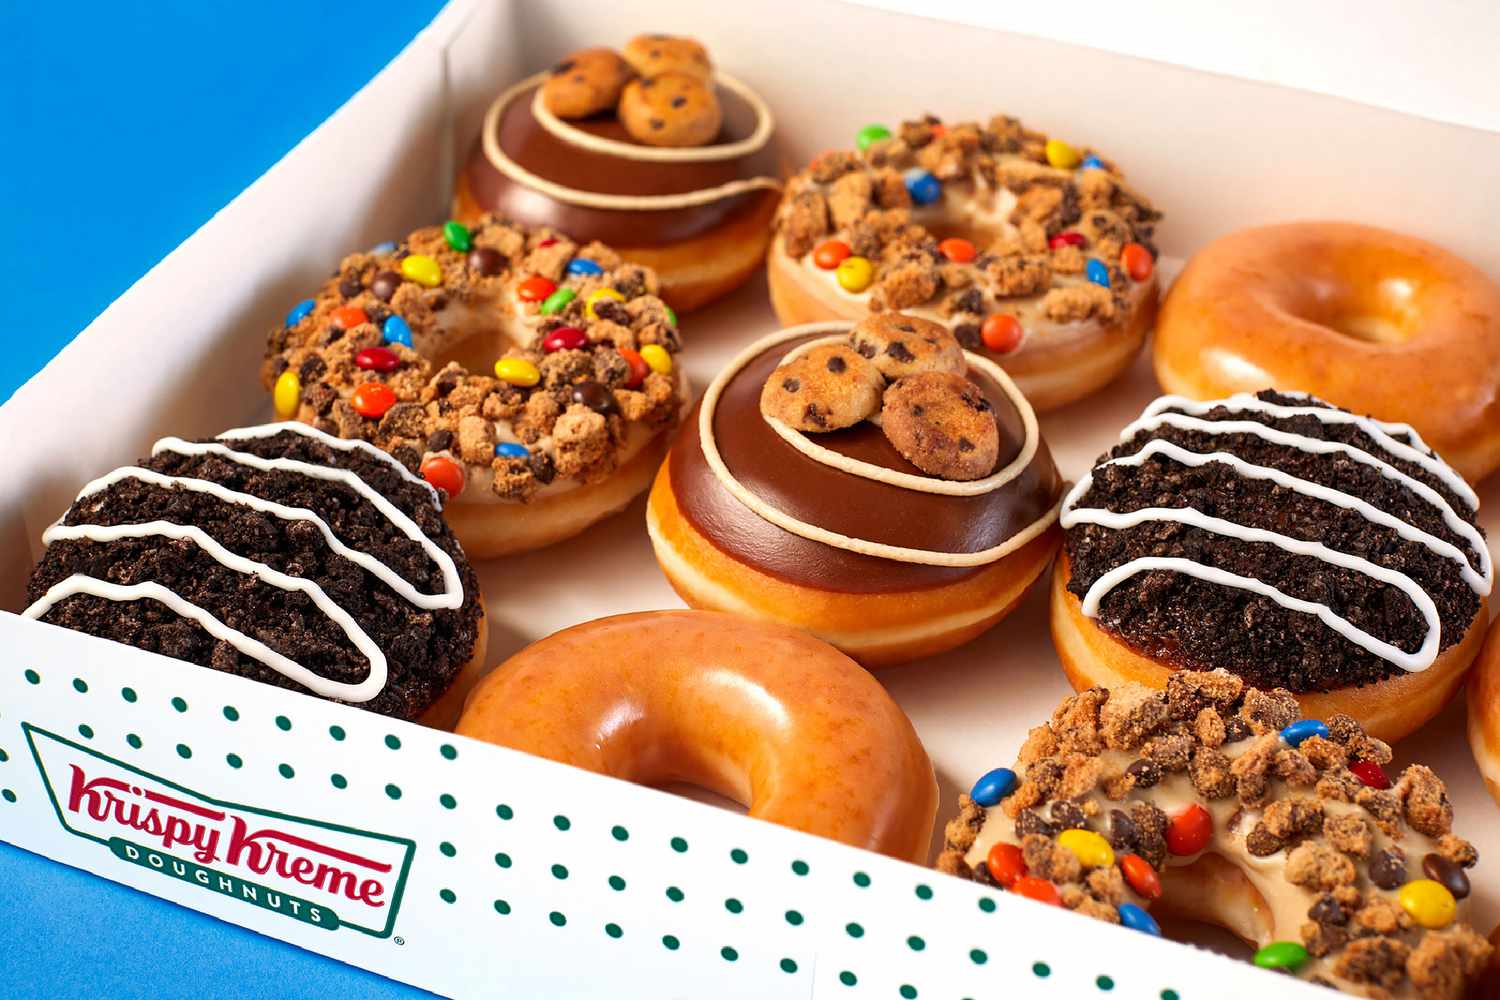 Krispy Kreme The Sweet Success and Global Doughnut Phenomenon